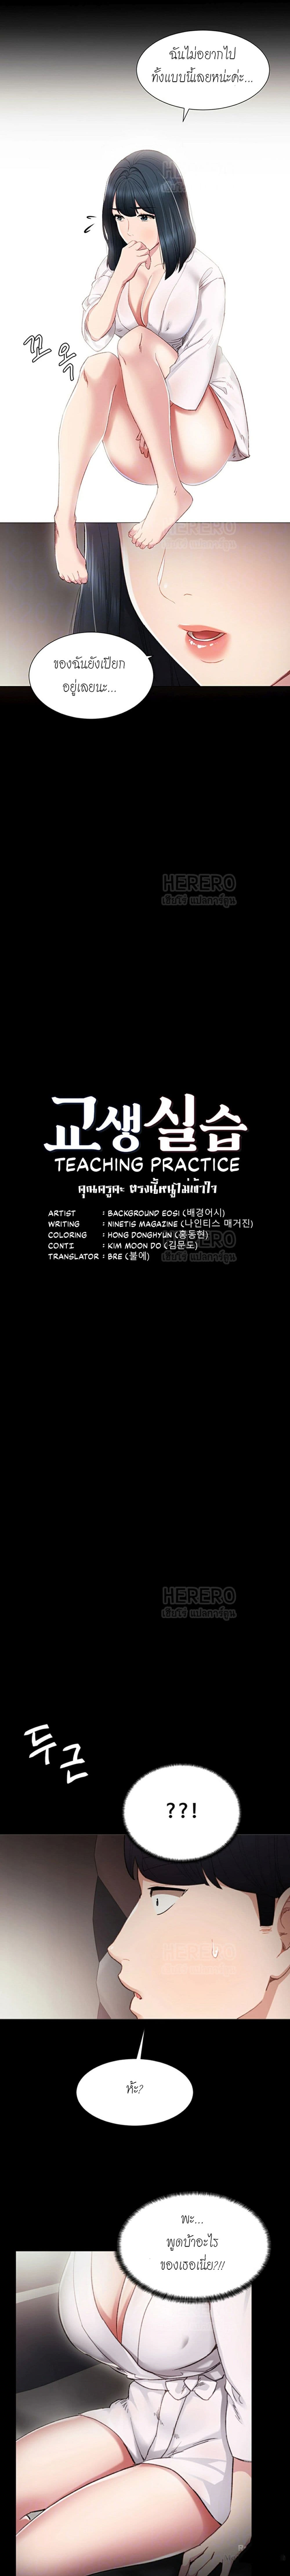 Teaching Practice 7 (2)